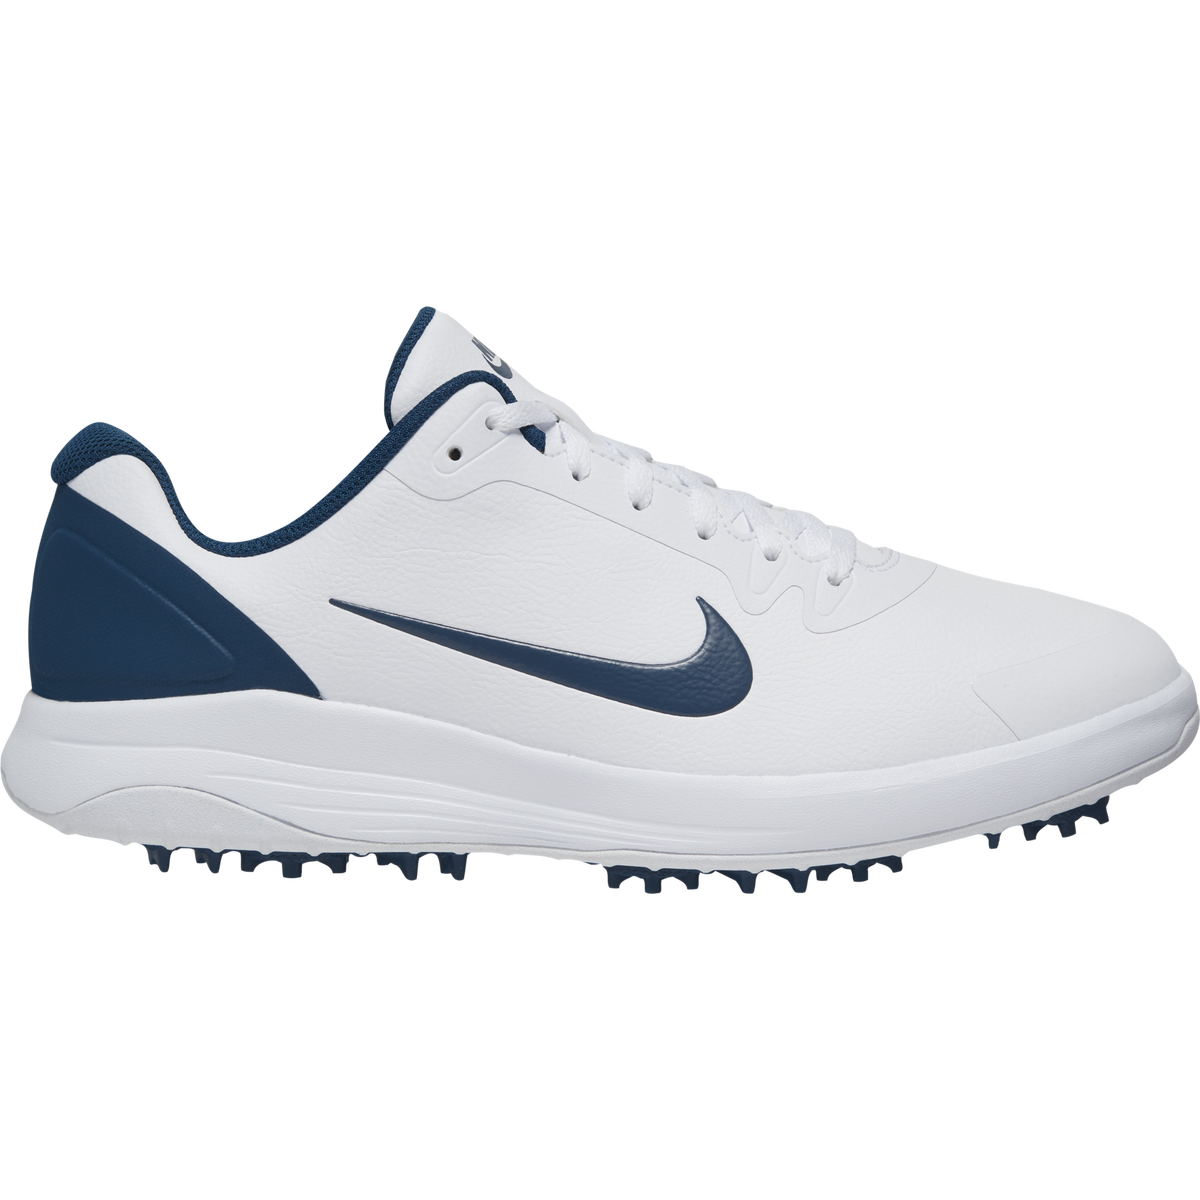 Nike Infinity G Men's Golf Shoe - White/Blue | PGA TOUR Superstore